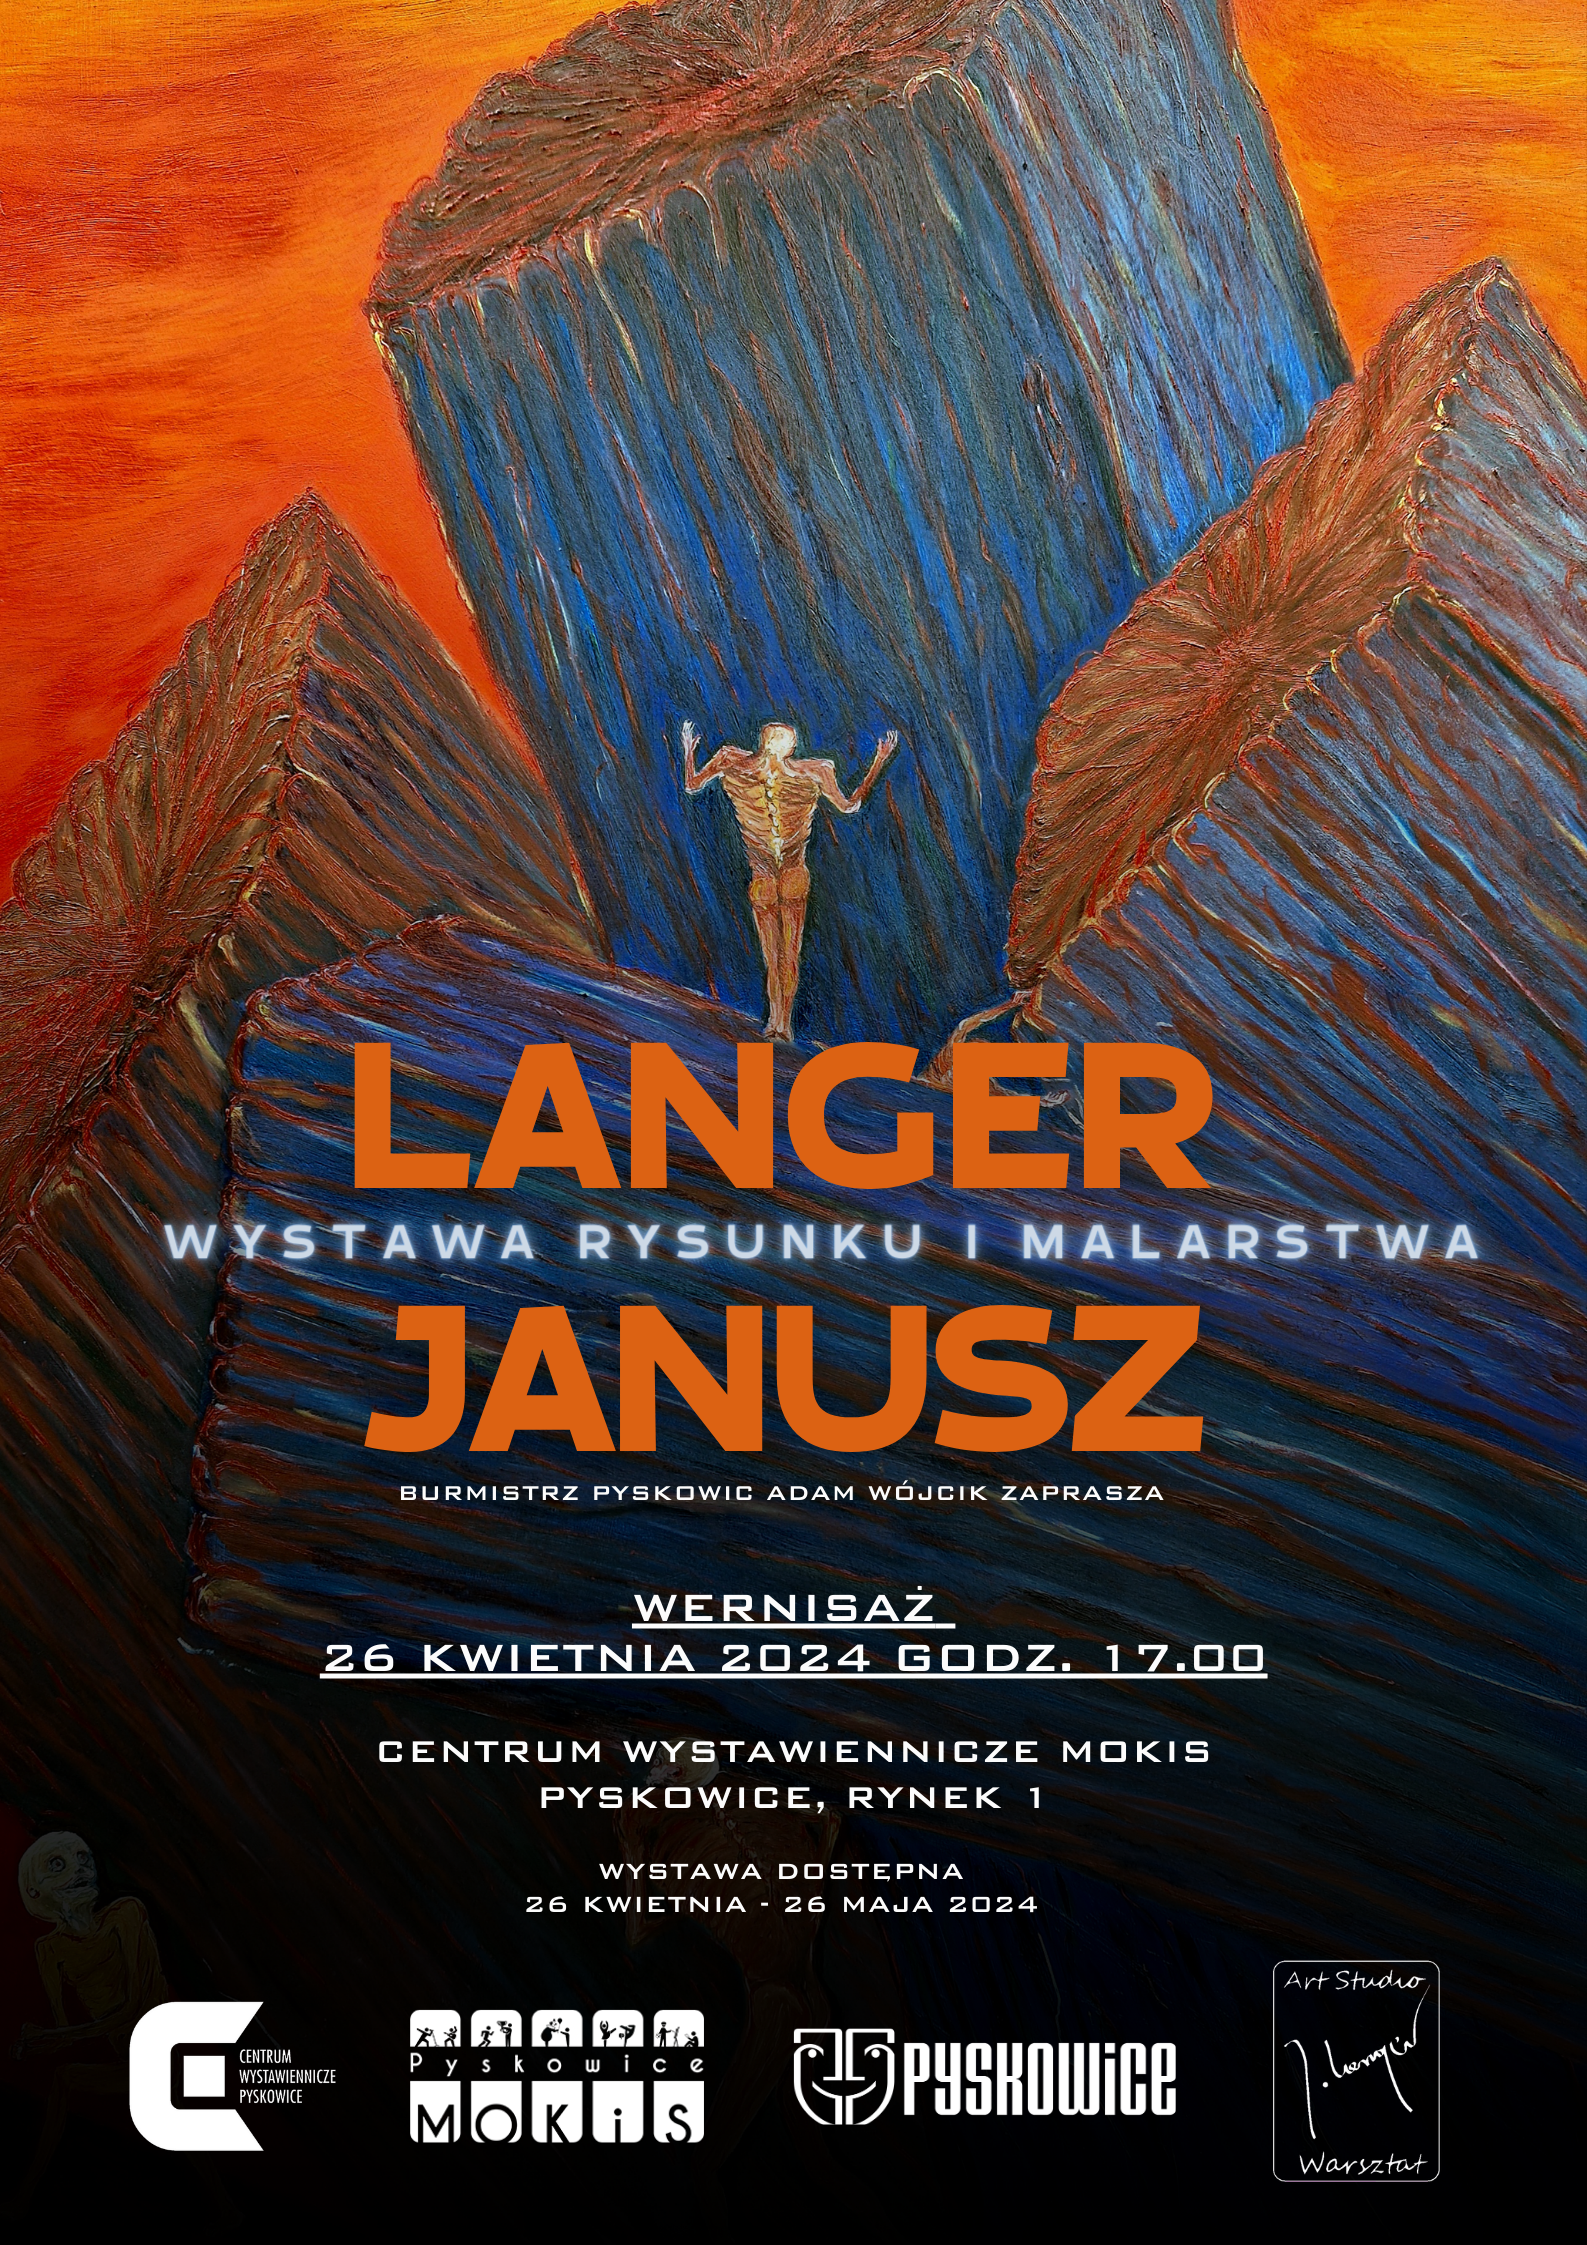 Wystawa rysunku i malarstwa – Langer Janusz